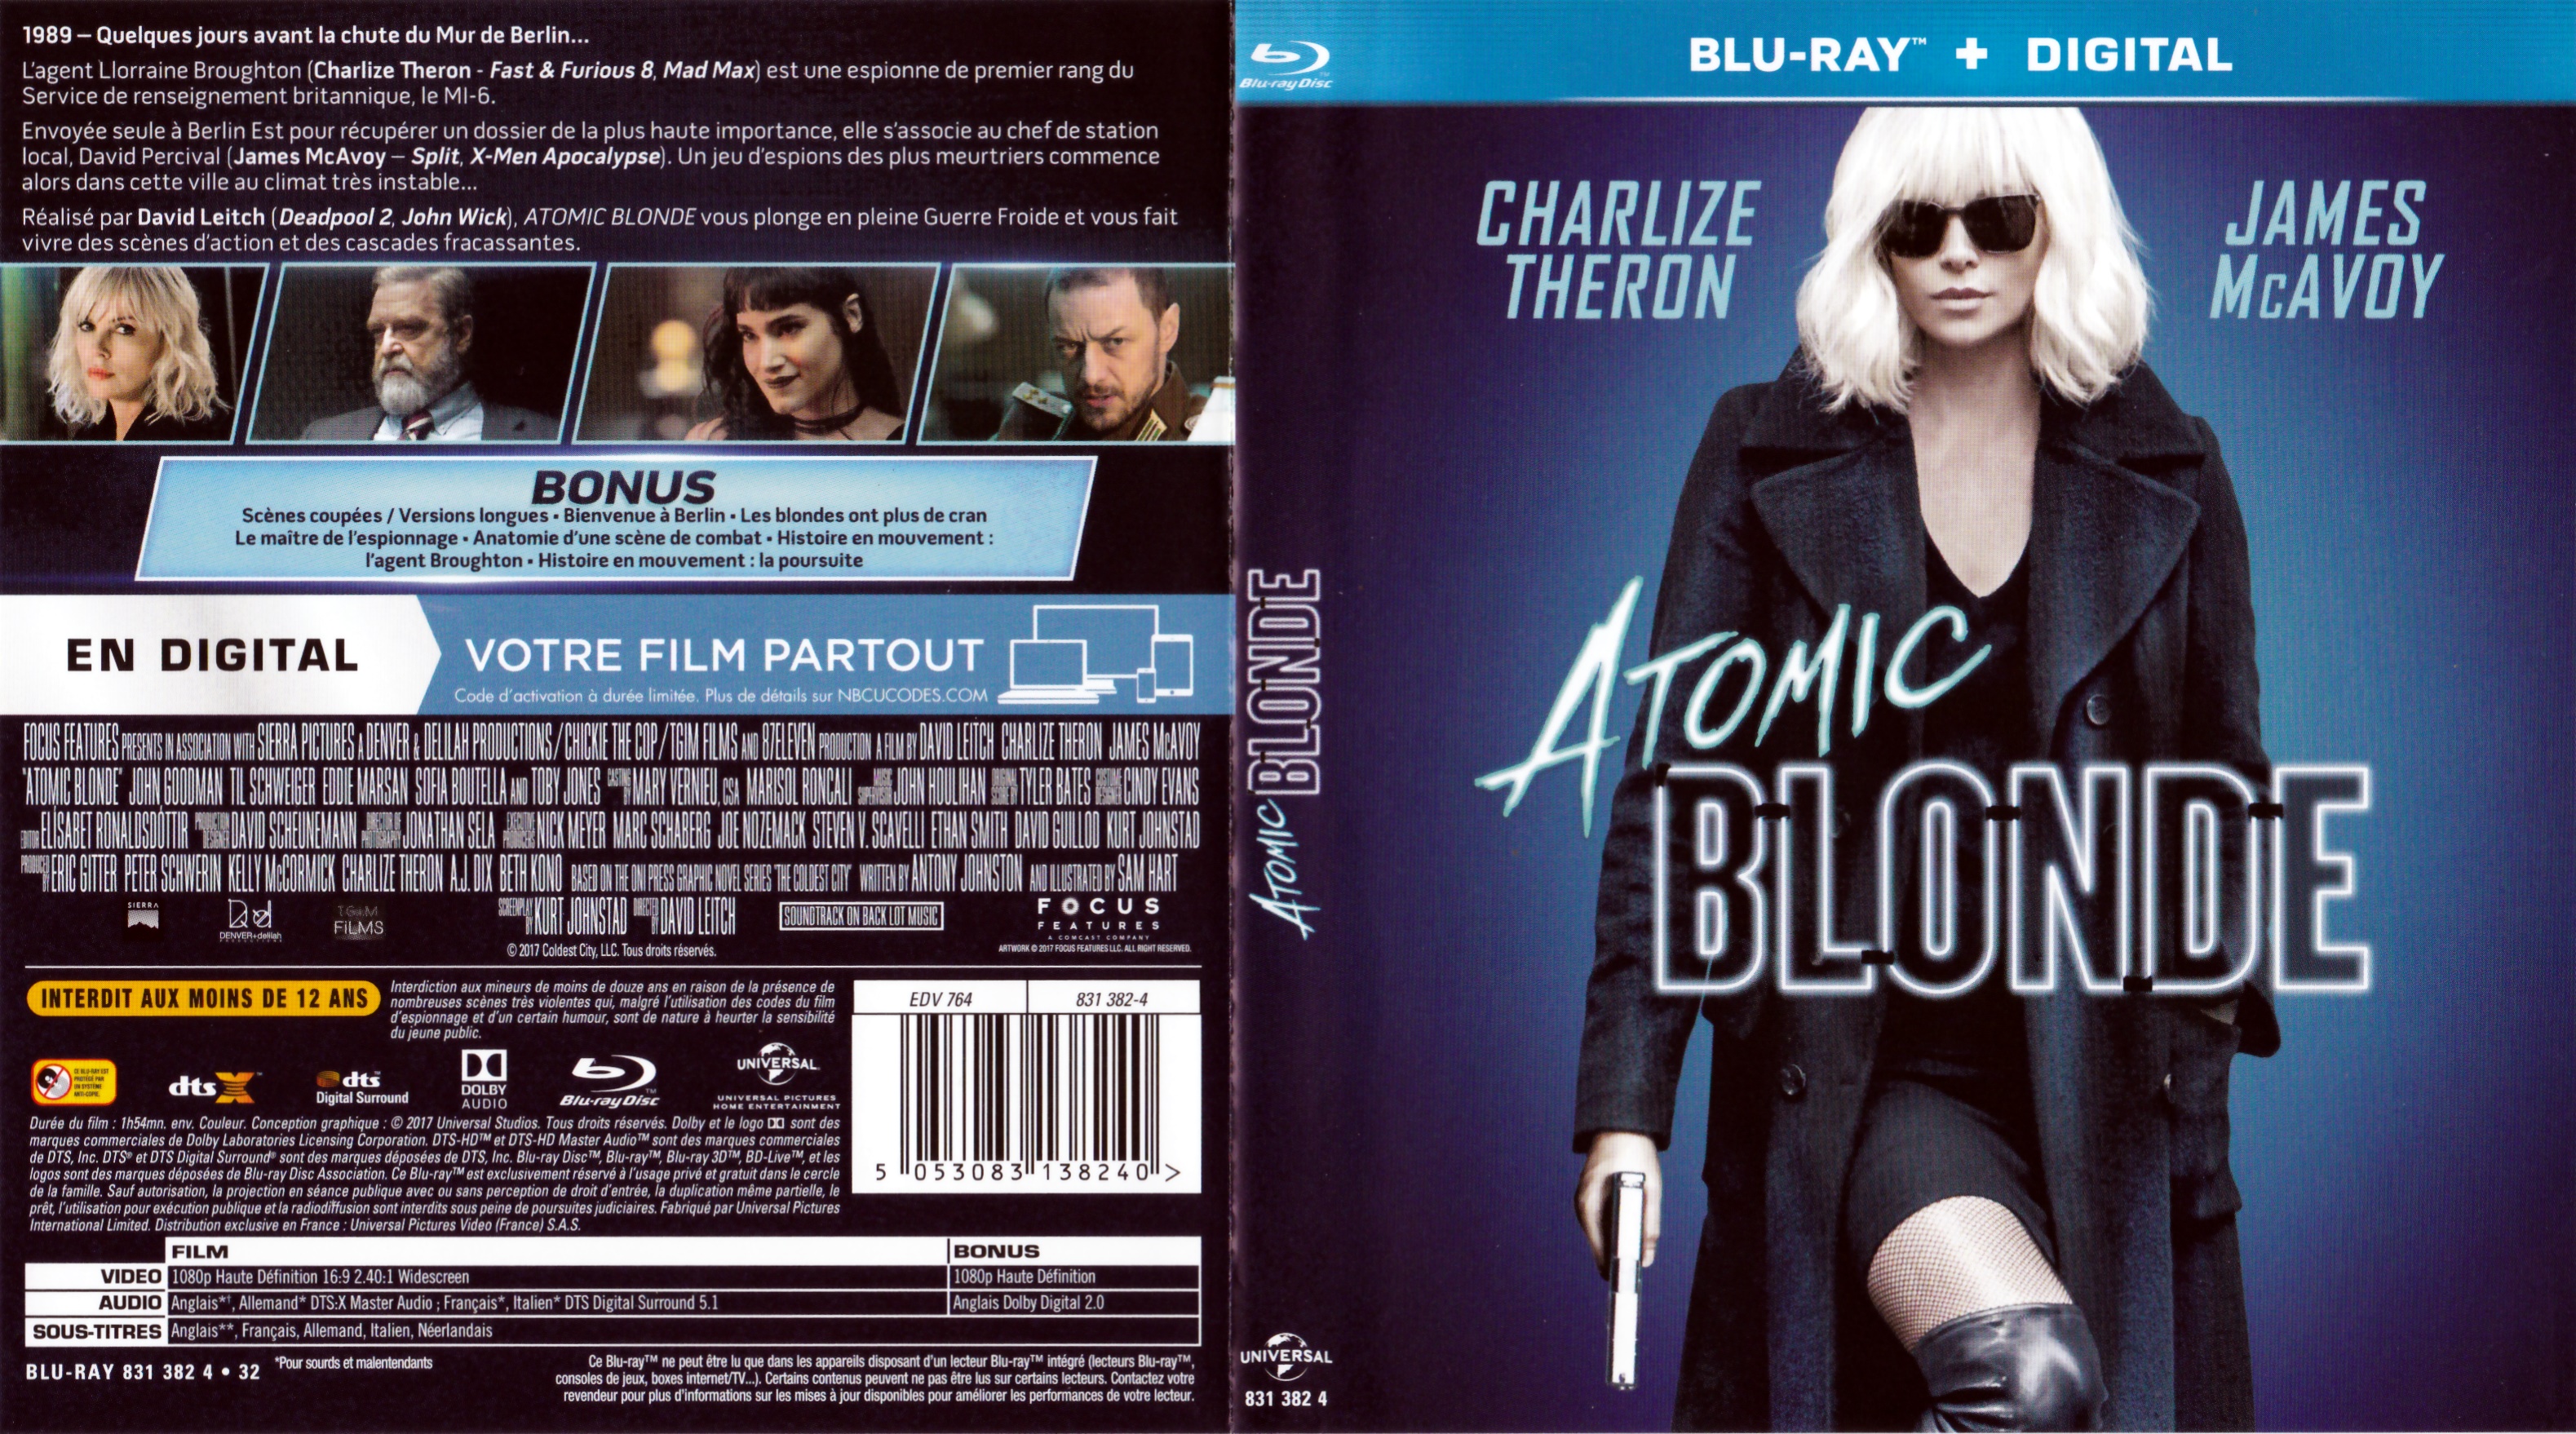 Jaquette DVD Atomic blonde (BLU-RAY)